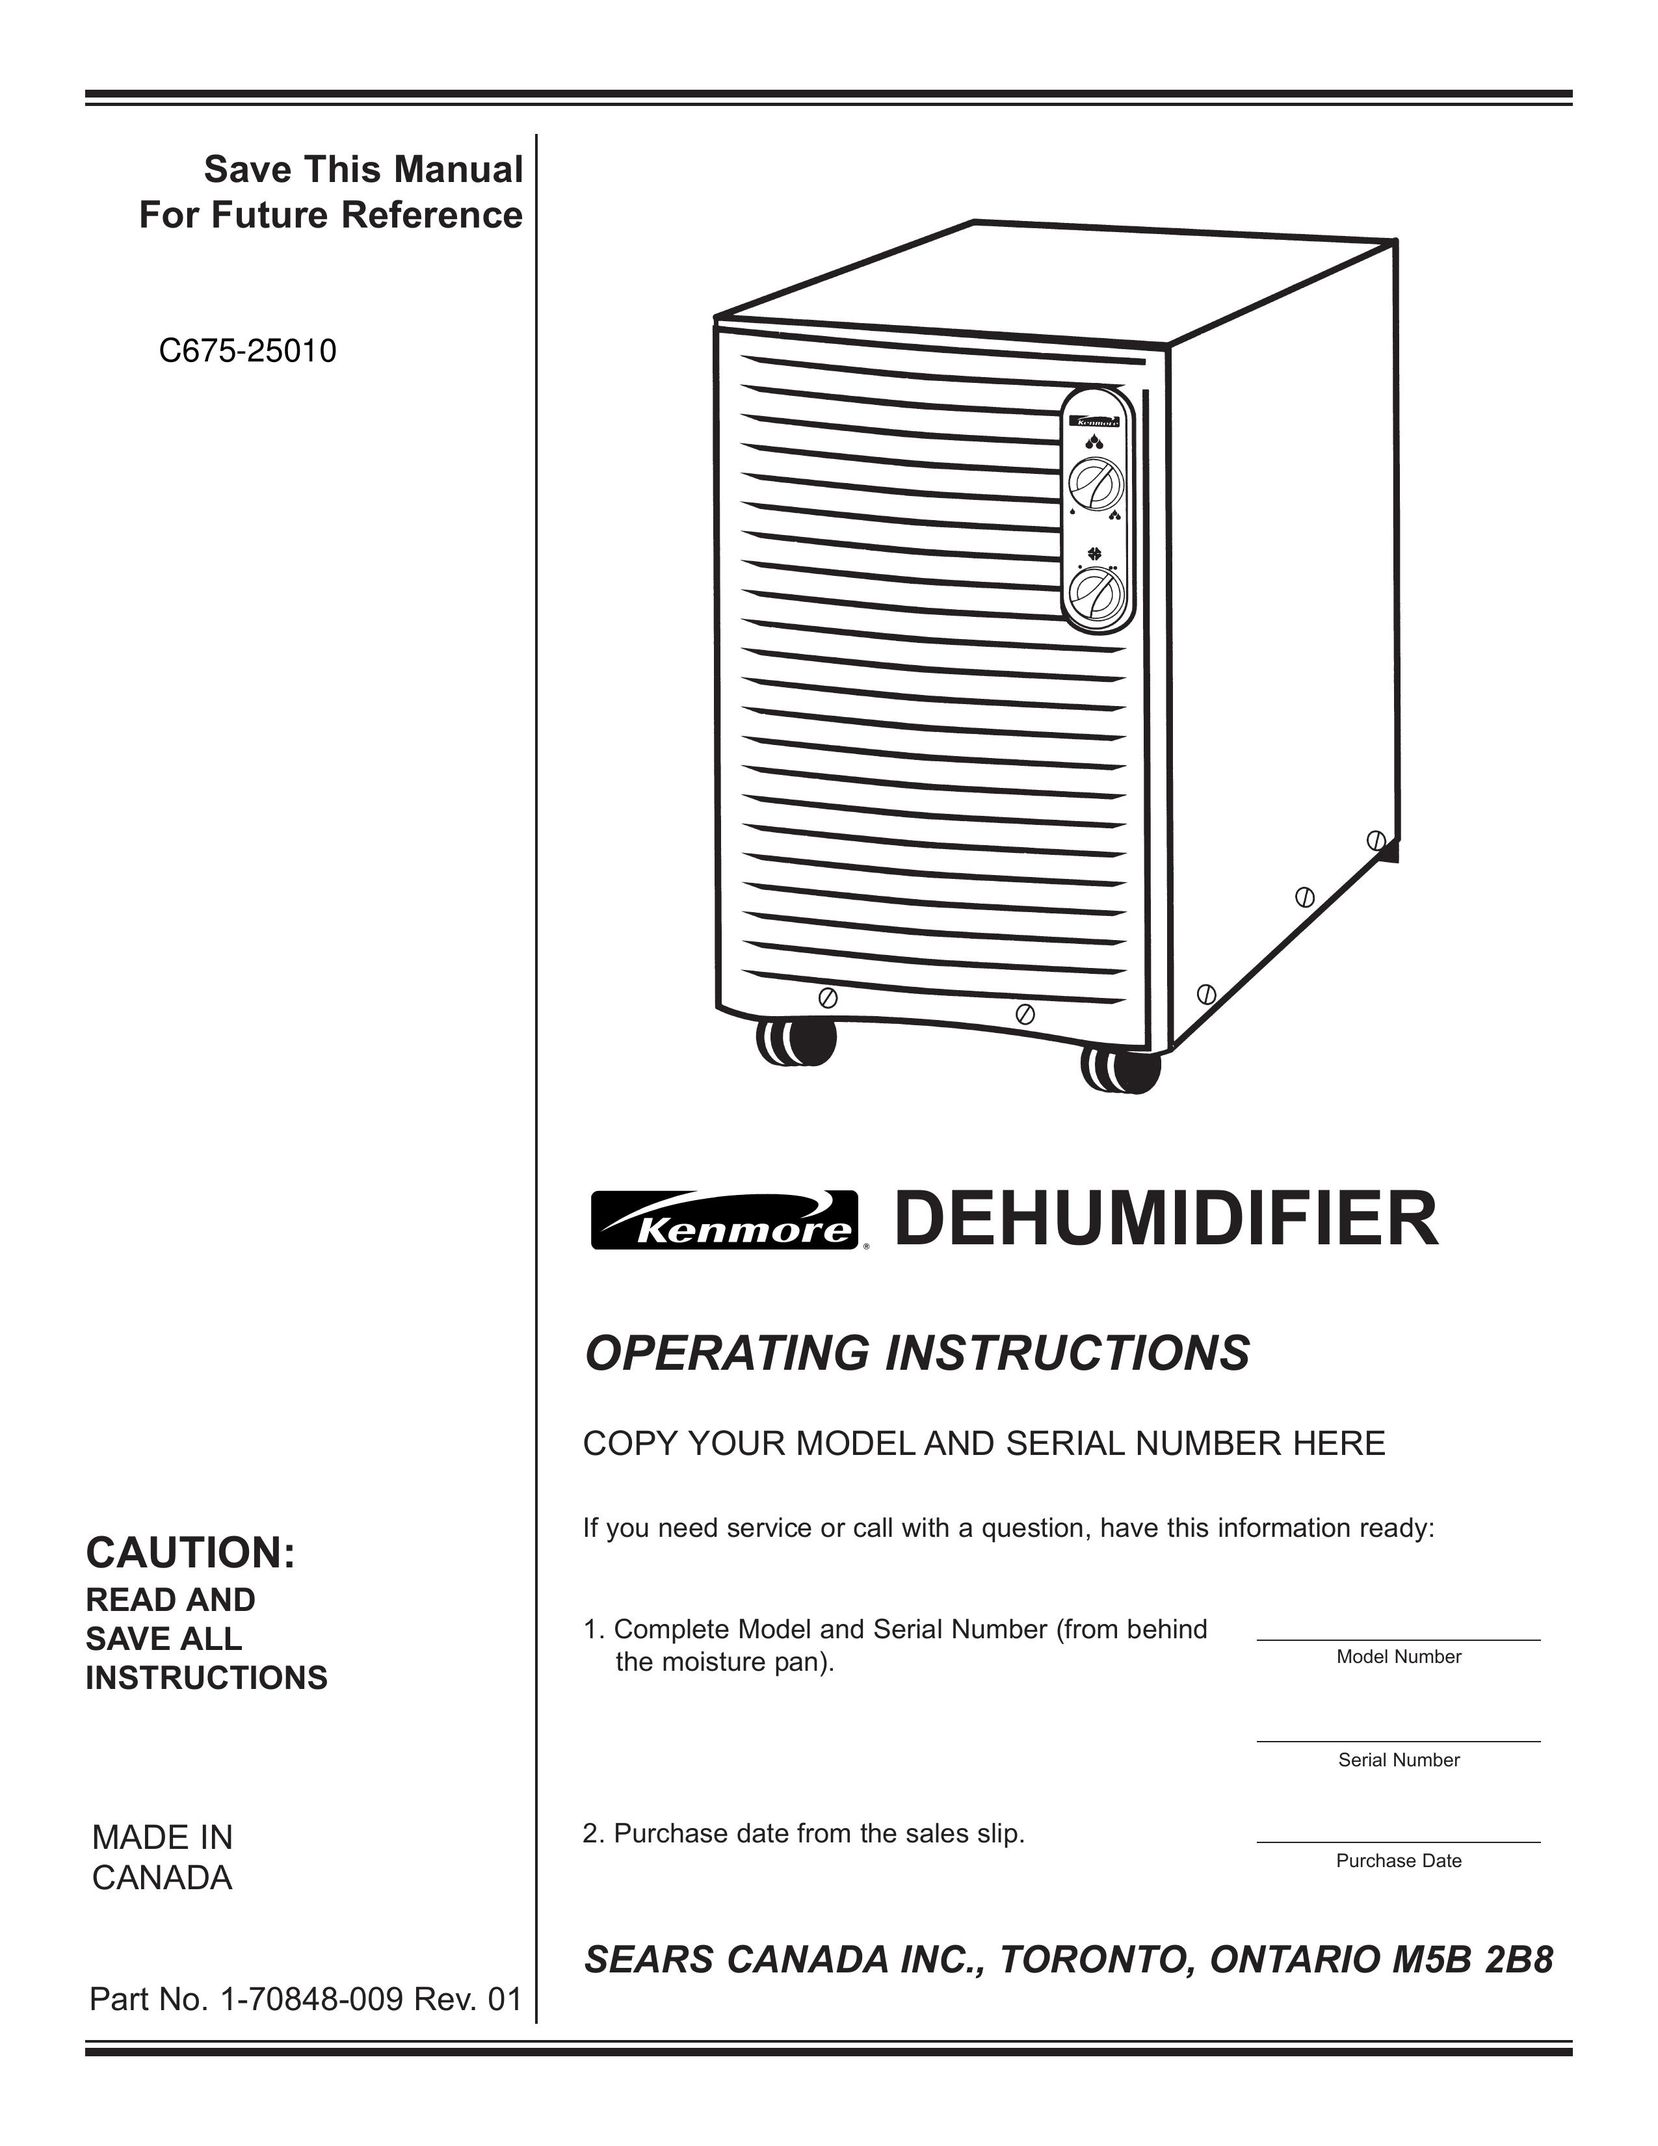 Kenmore C675-25010 Dehumidifier User Manual